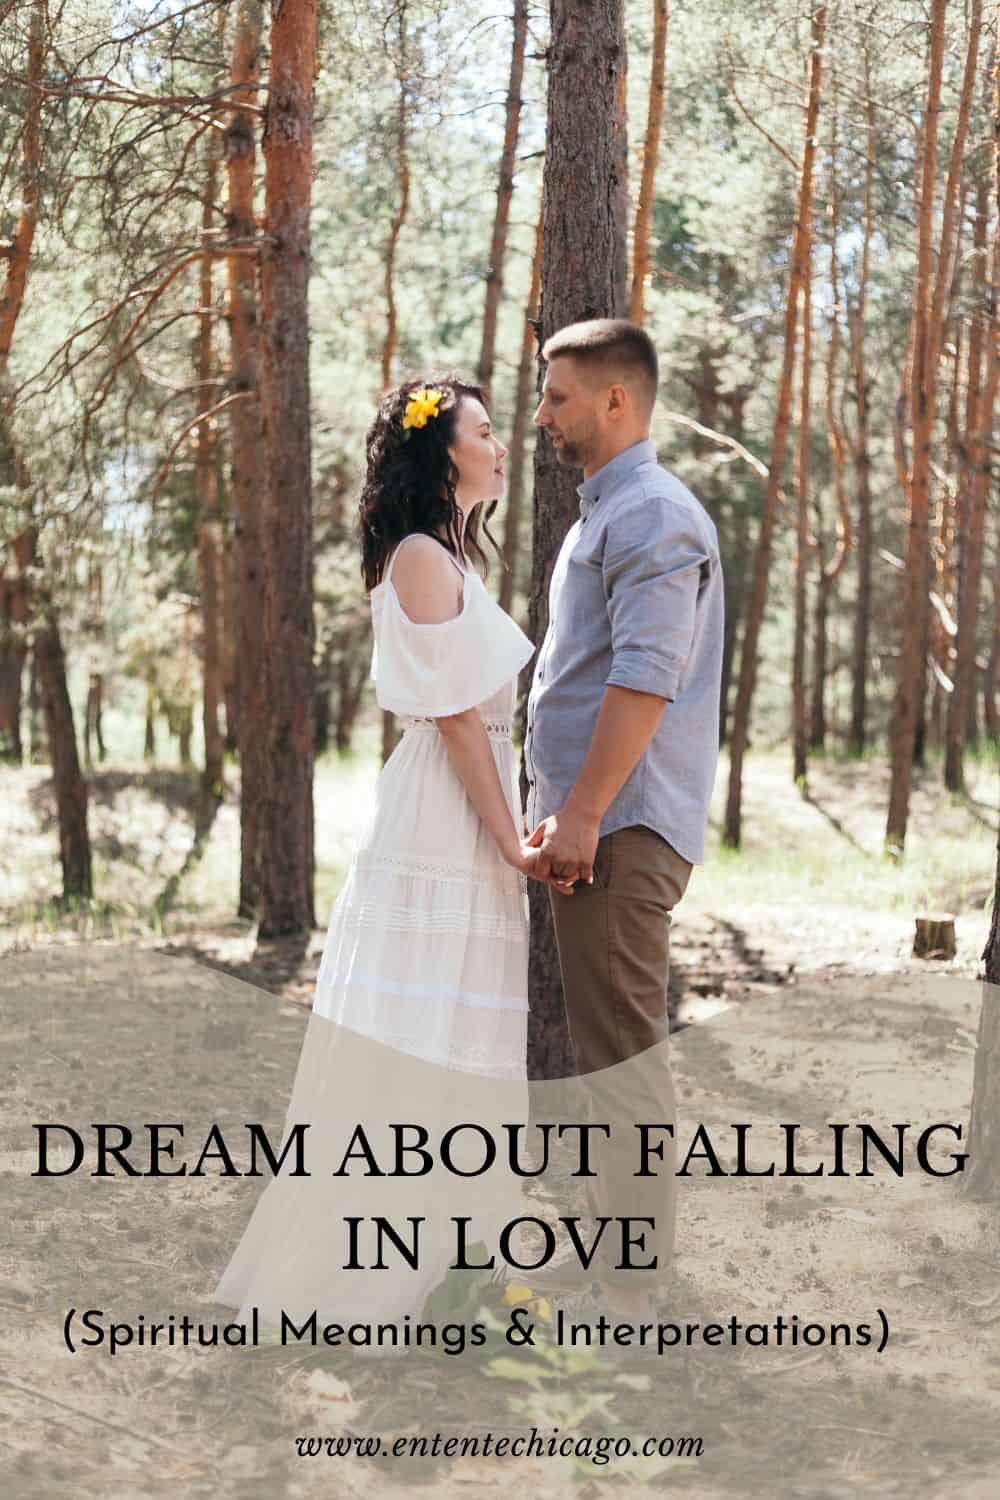 Dream About Falling in Love (Spiritual Meanings & Interpretations)